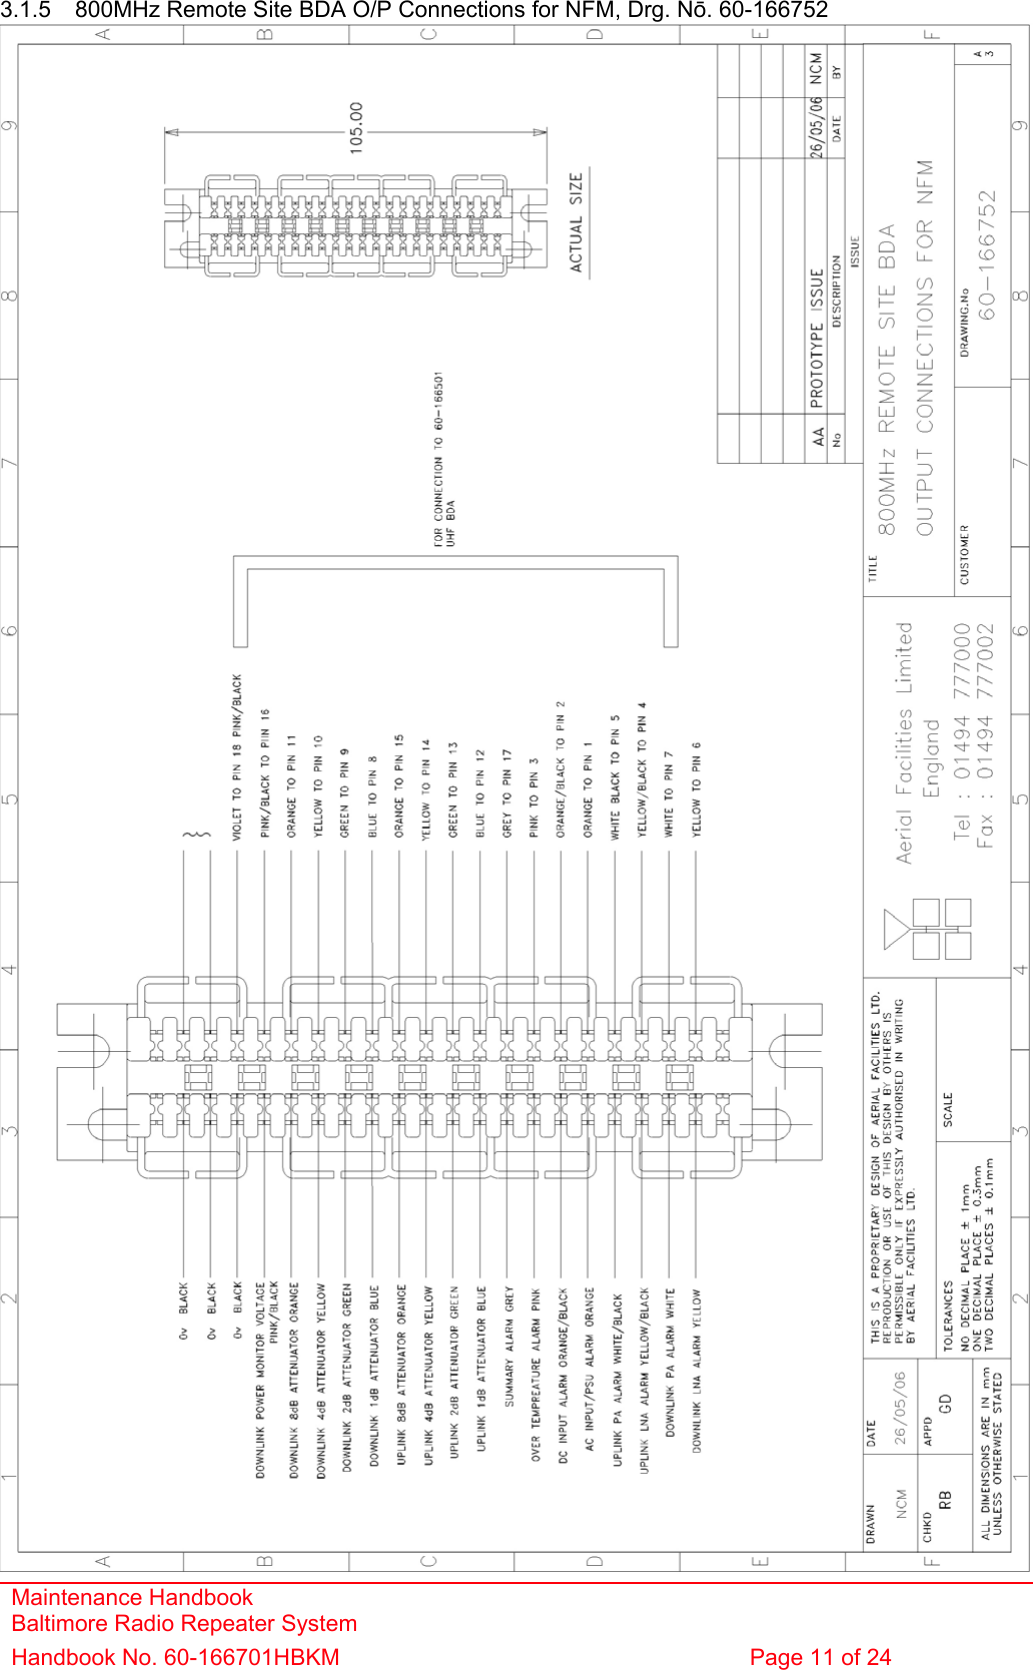 Maintenance Handbook Baltimore Radio Repeater System Handbook No. 60-166701HBKM  Page 11 of 24  3.1.5  800MHz Remote Site BDA O/P Connections for NFM, Drg. Nō. 60-166752  